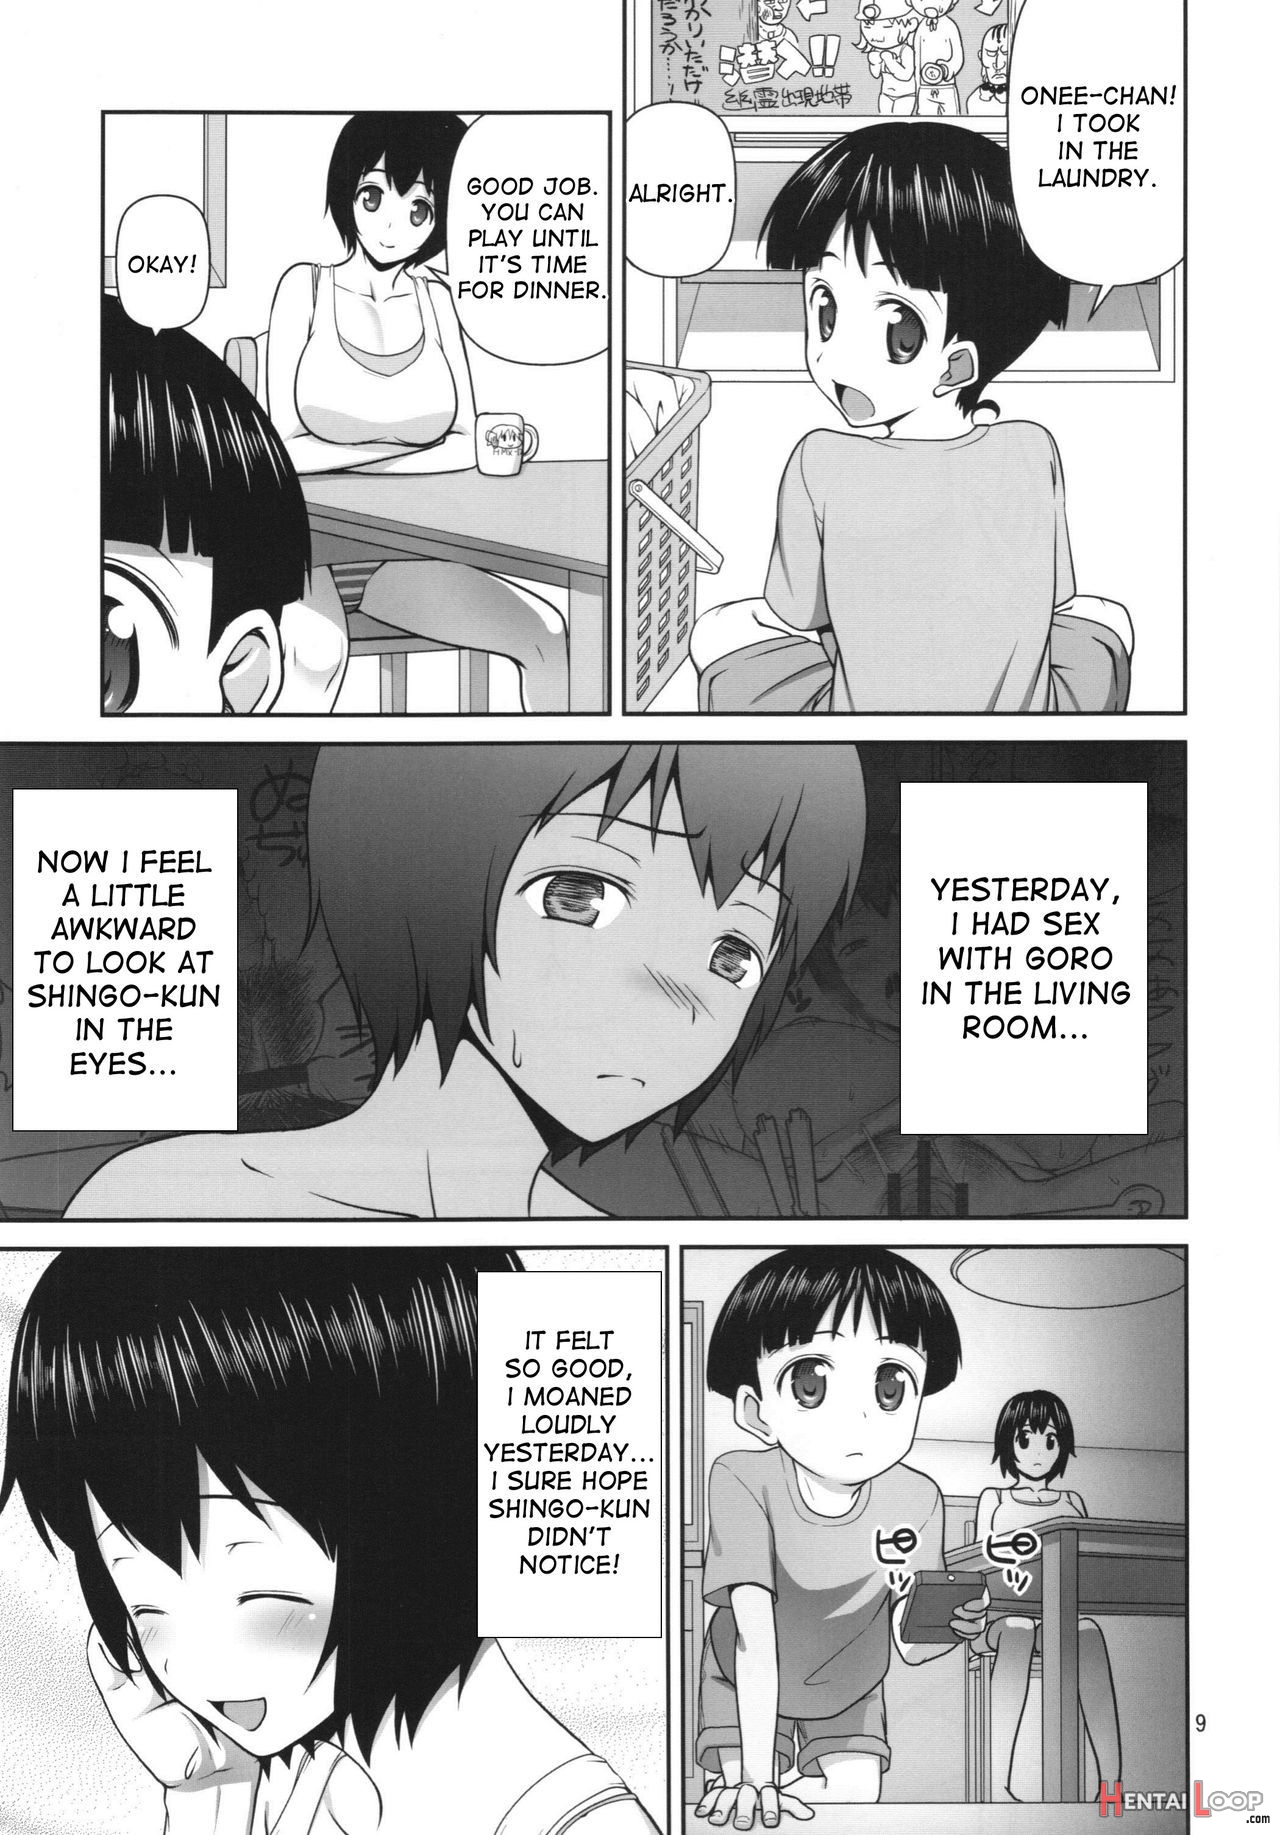 Mania Shimizu page 9